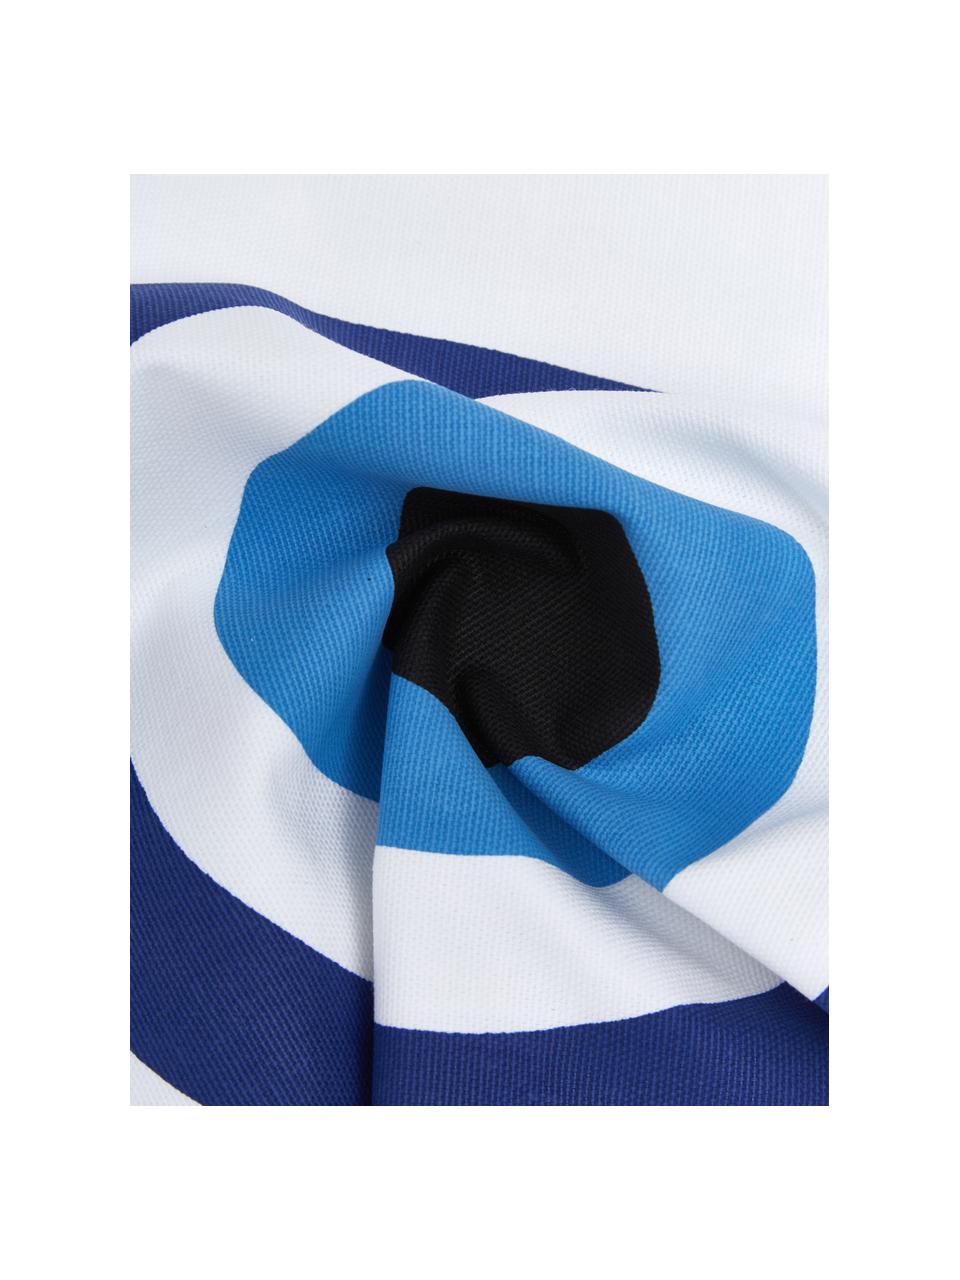 Federa arredo blu/bianca Nazar, 100% cotone, Blu, nero, Larg. 40 x Lung. 40 cm